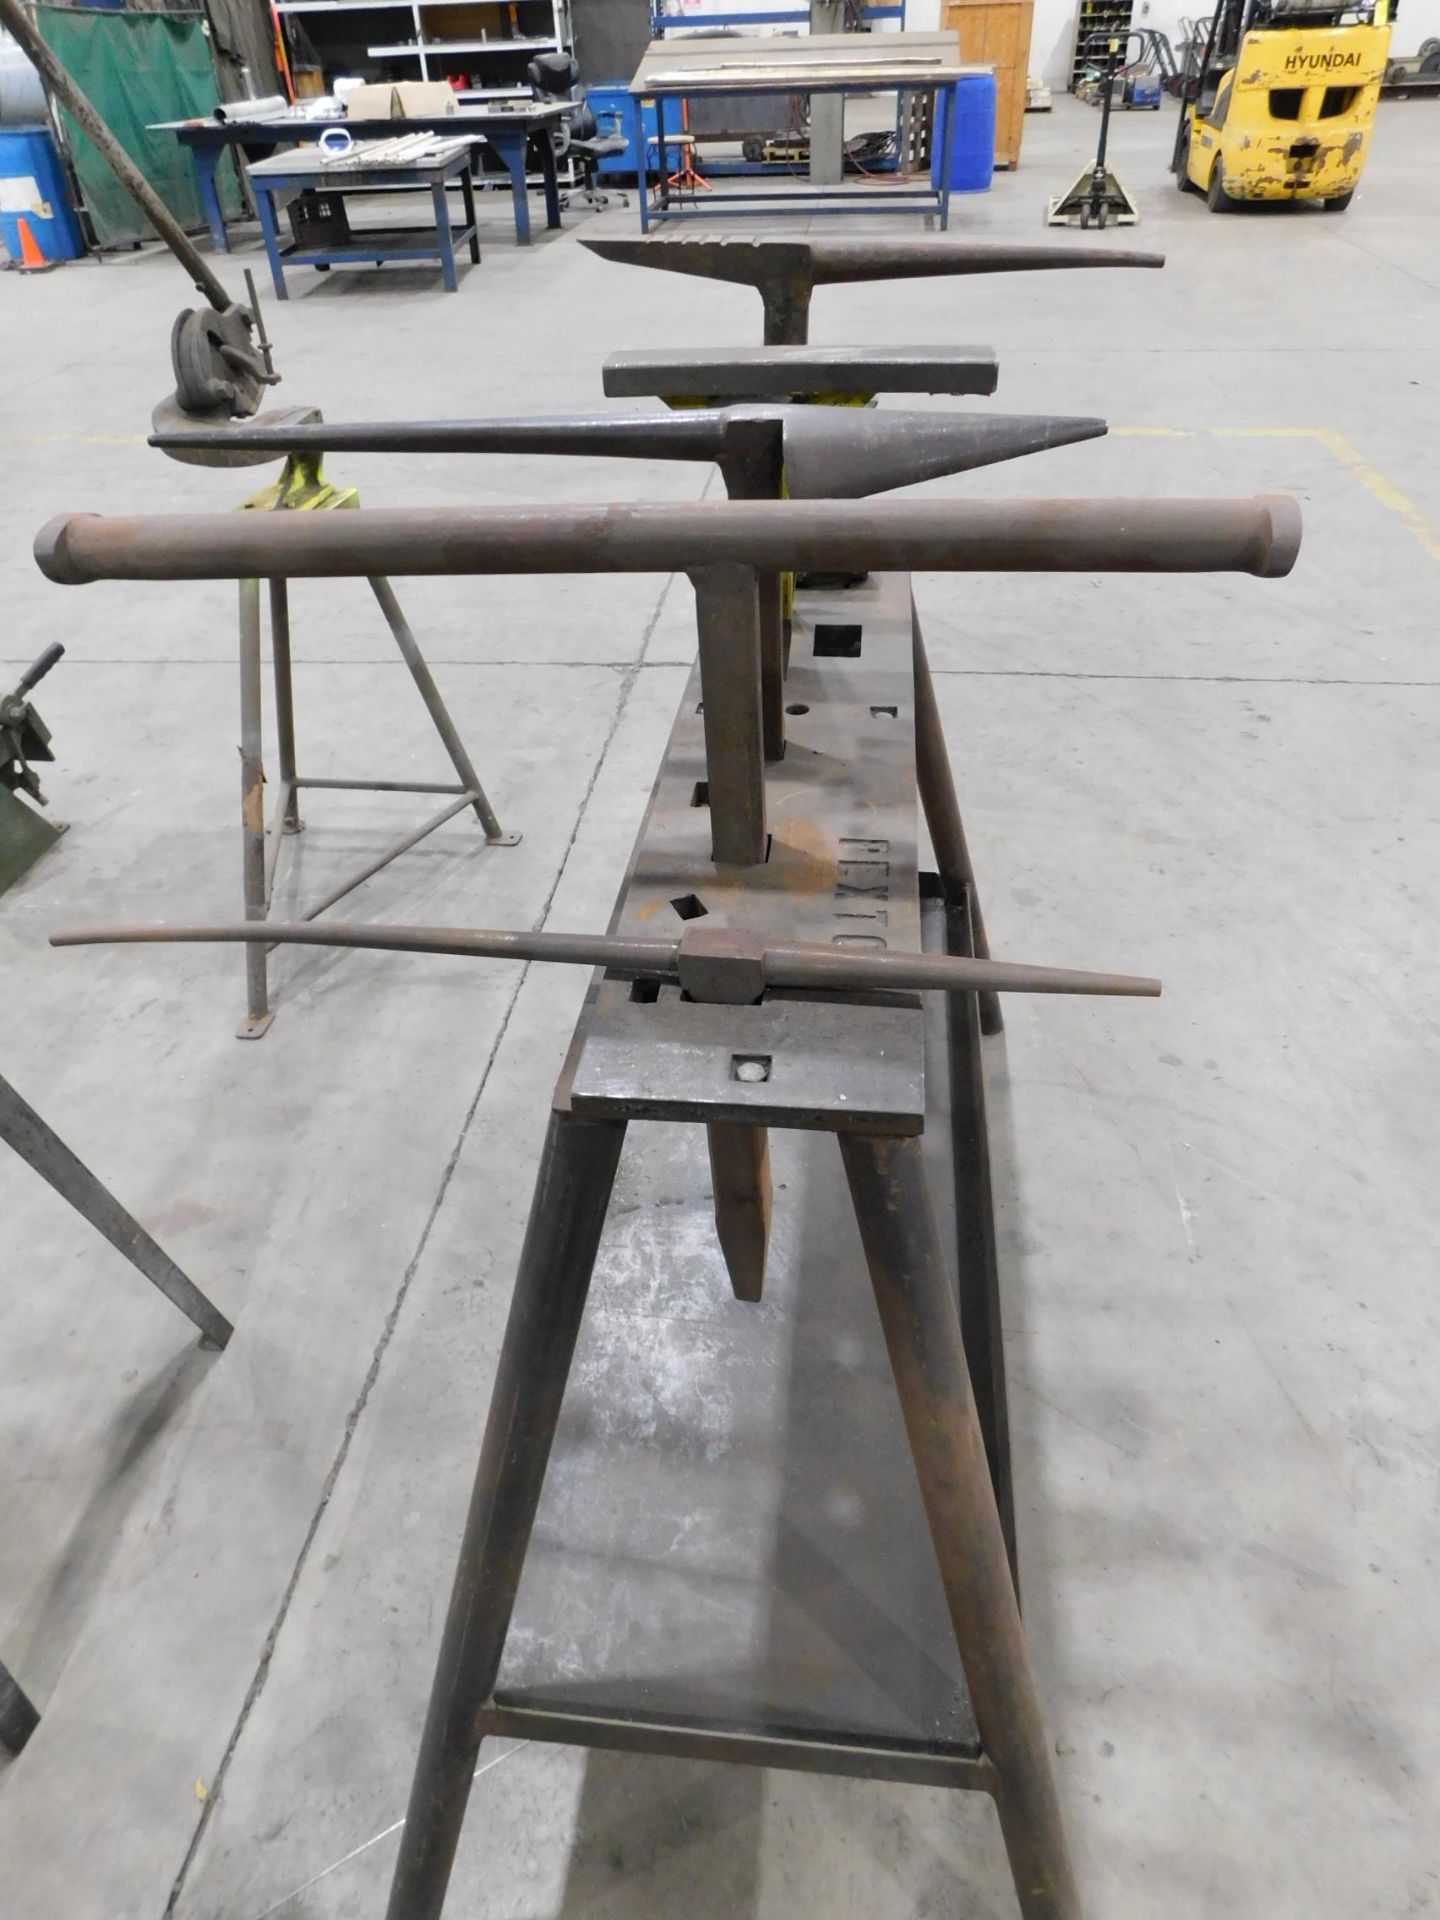 Pexto Metal Fabricators Bench with Blacksmith Tools - Image 4 of 6